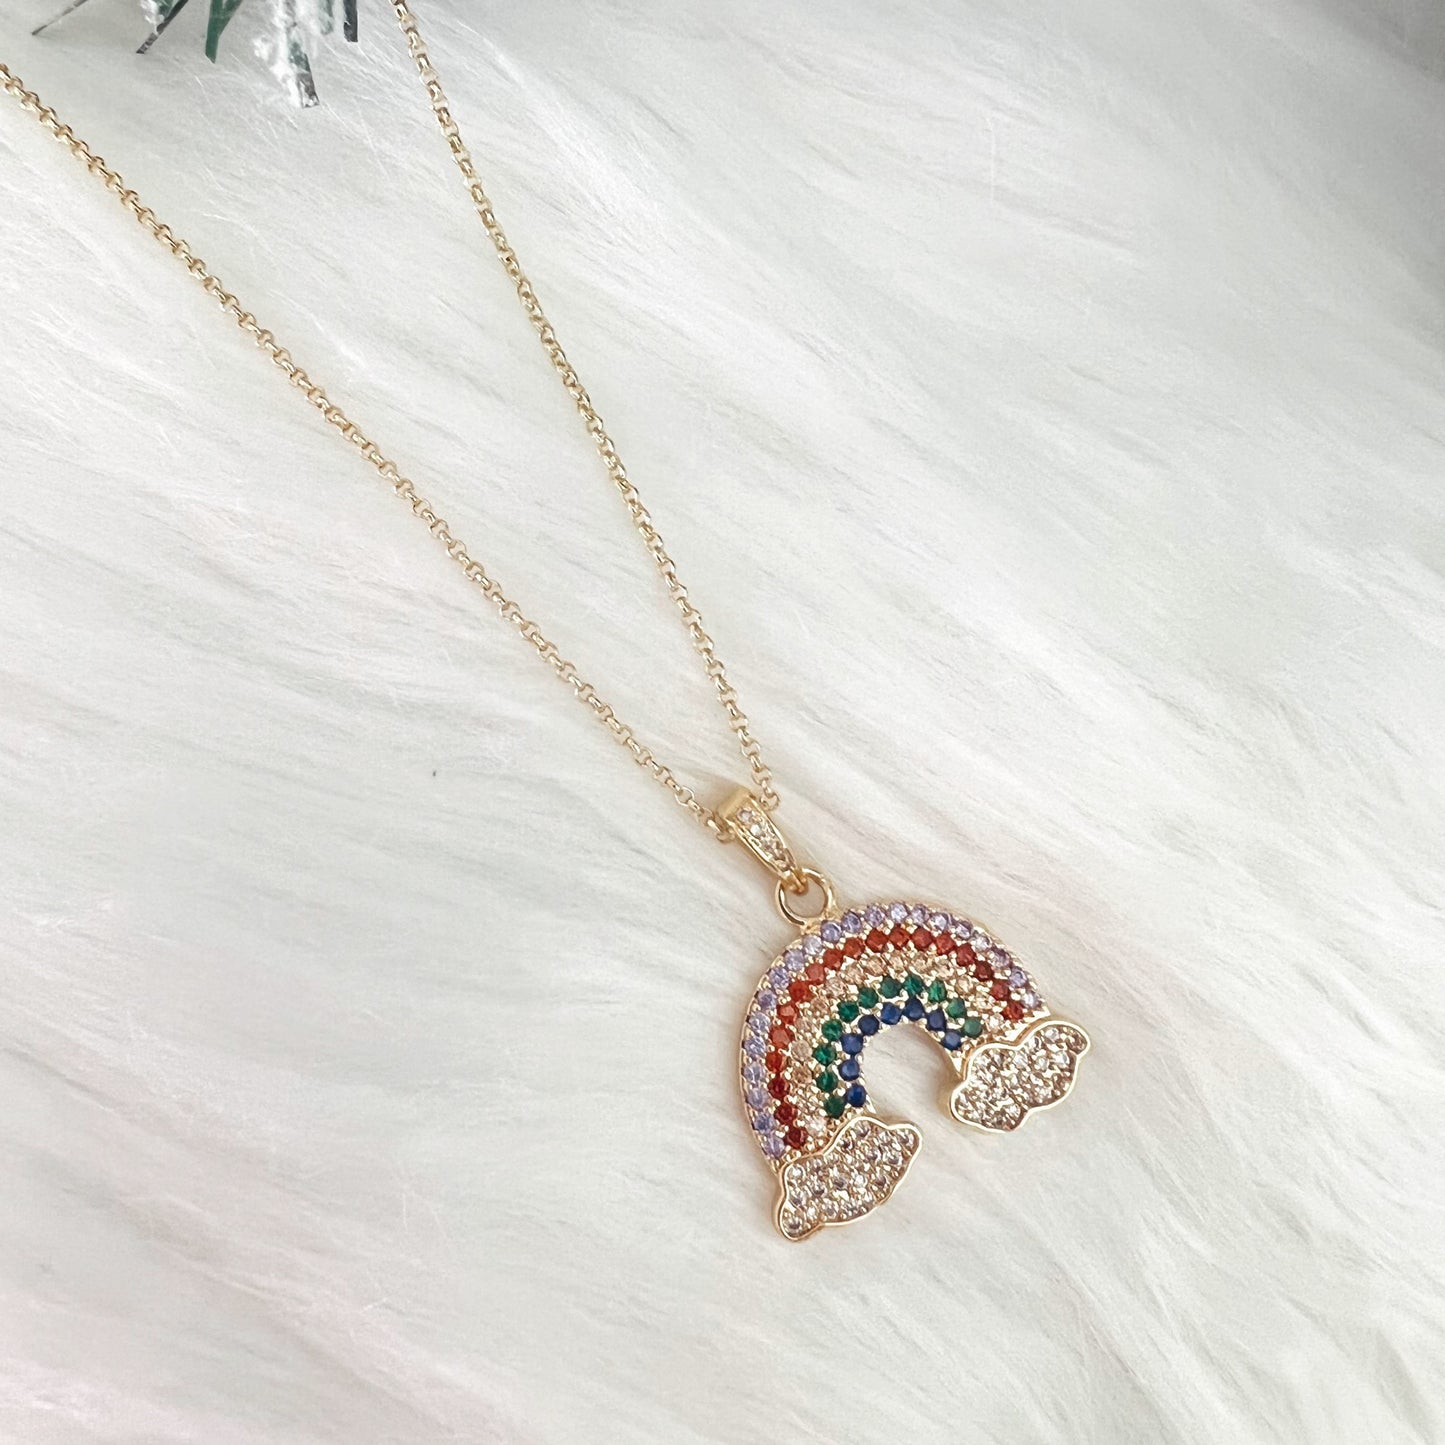 Arcoíris necklace